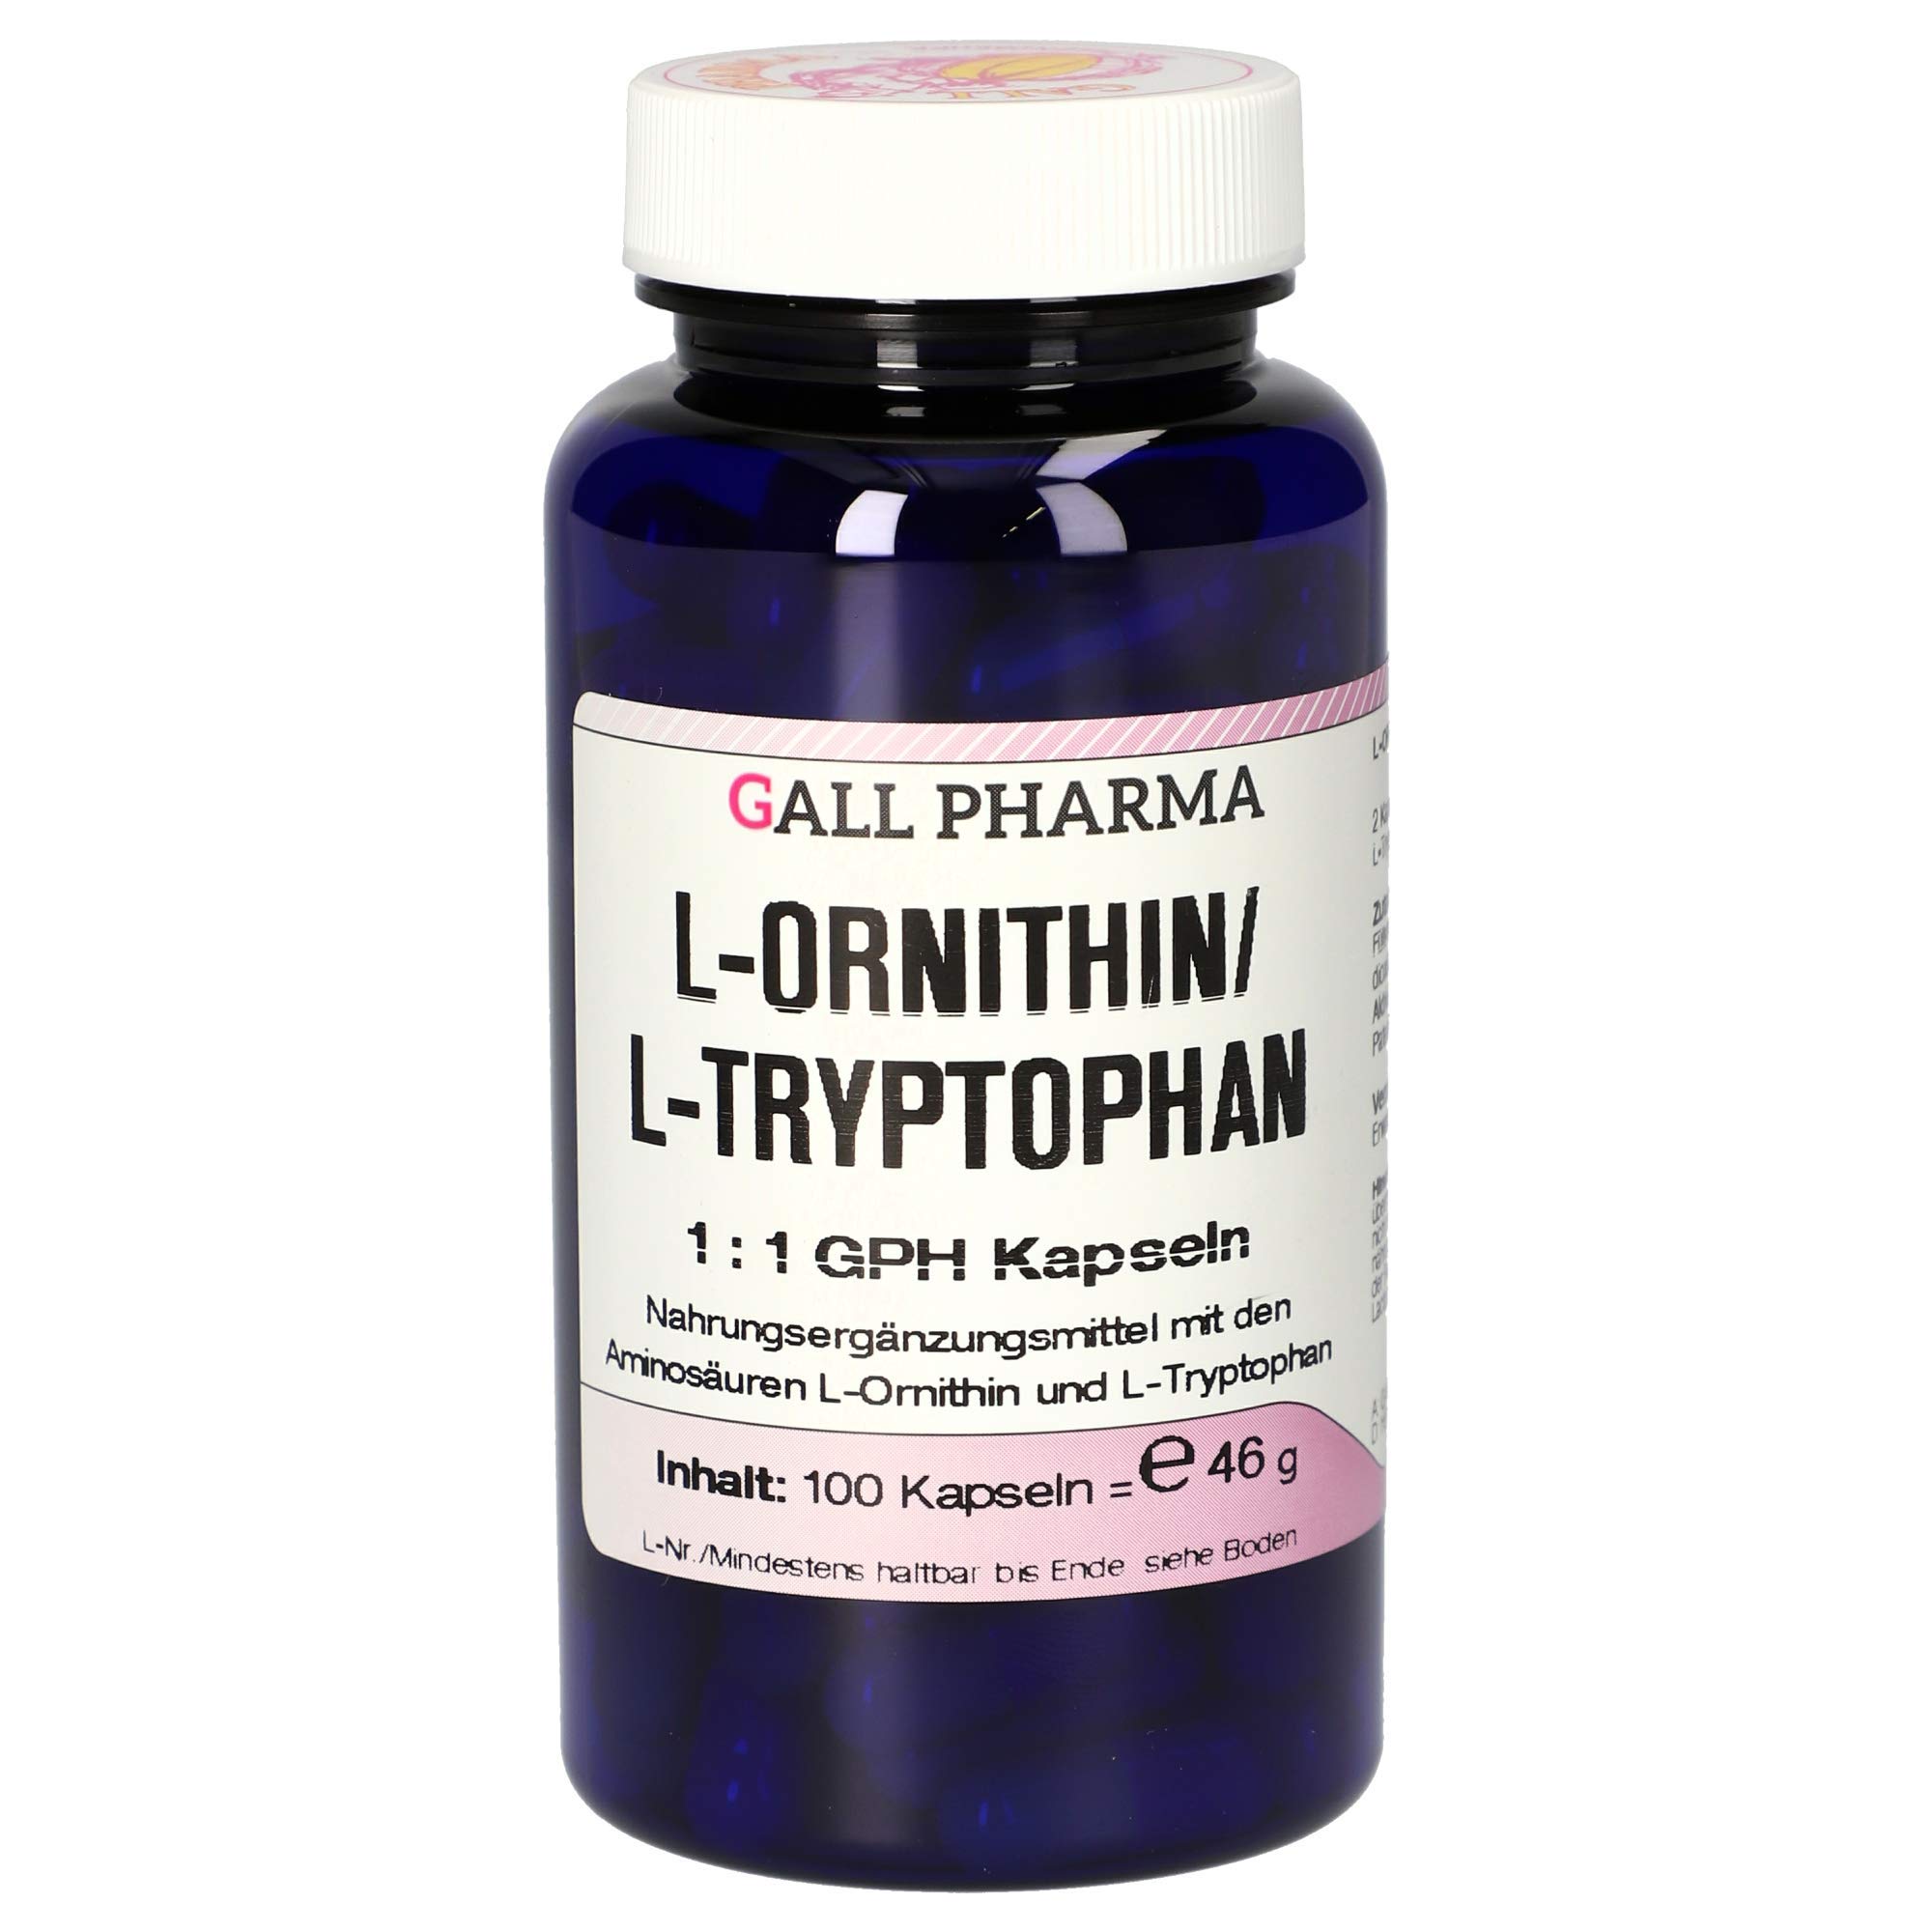 Gall Pharma L-Ornithin / L-Tryptophan 1:1 GPH Kapseln, 100 Kapseln